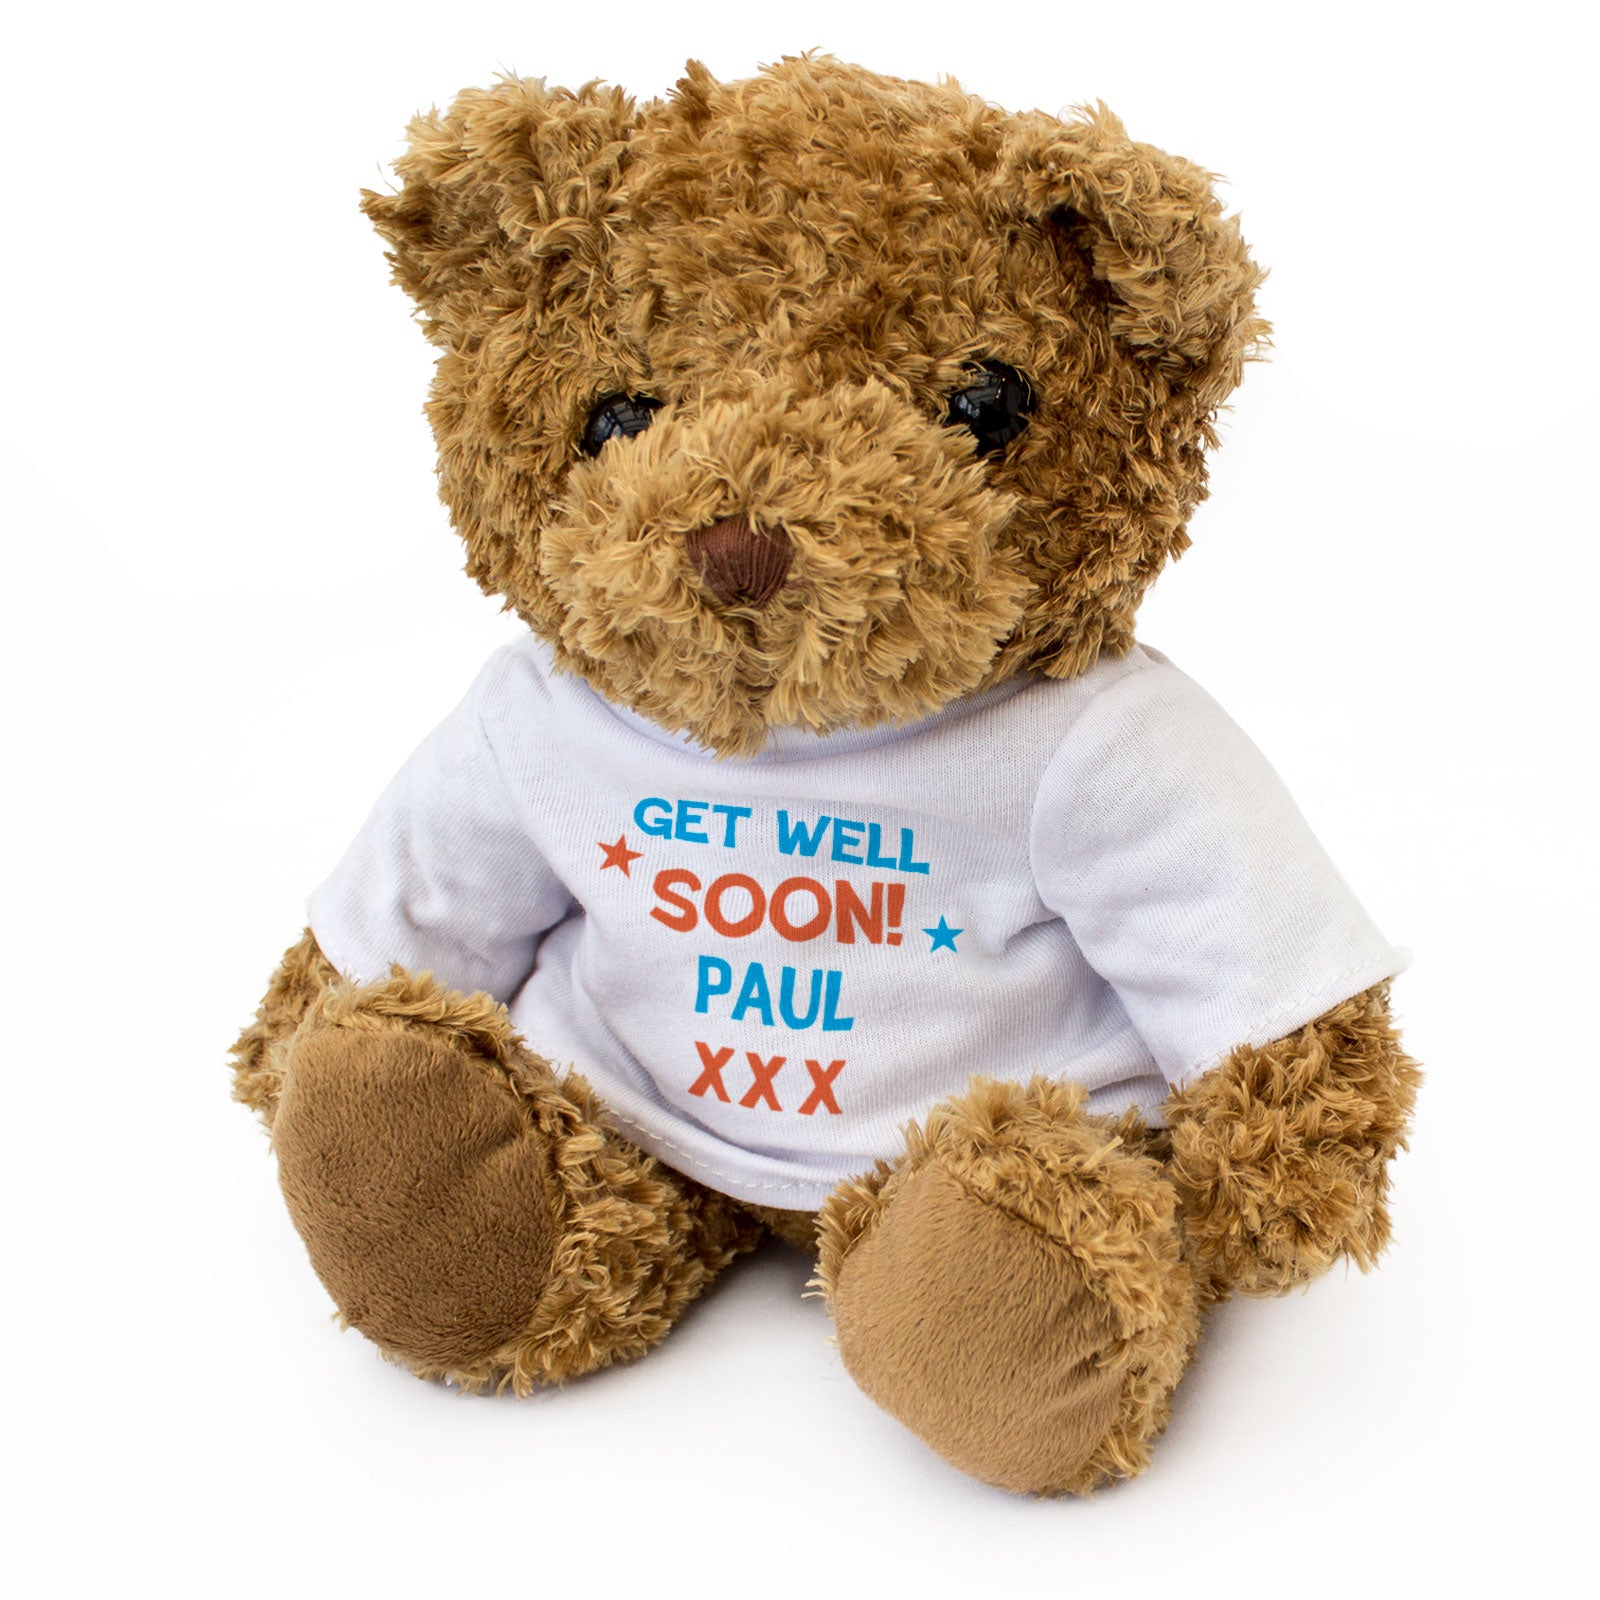 Get Well Soon Teddy Bear & Cookie Pail